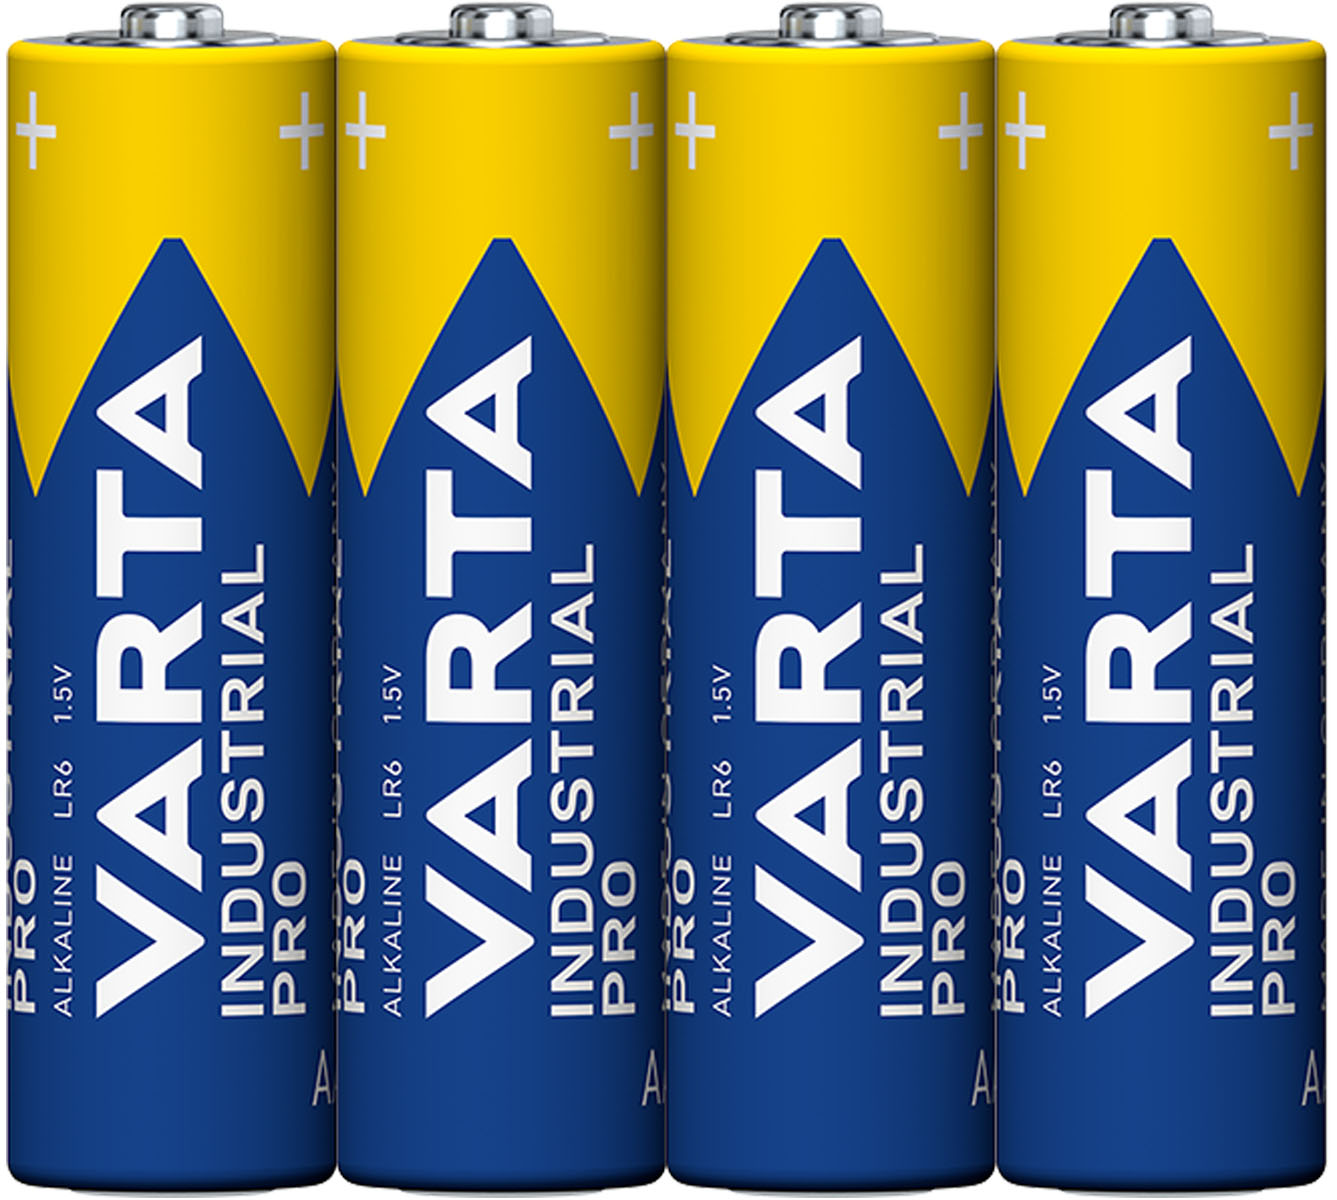 Varta Mignon Batterie 4006 211 354 Industrial Pro in 4er Folie